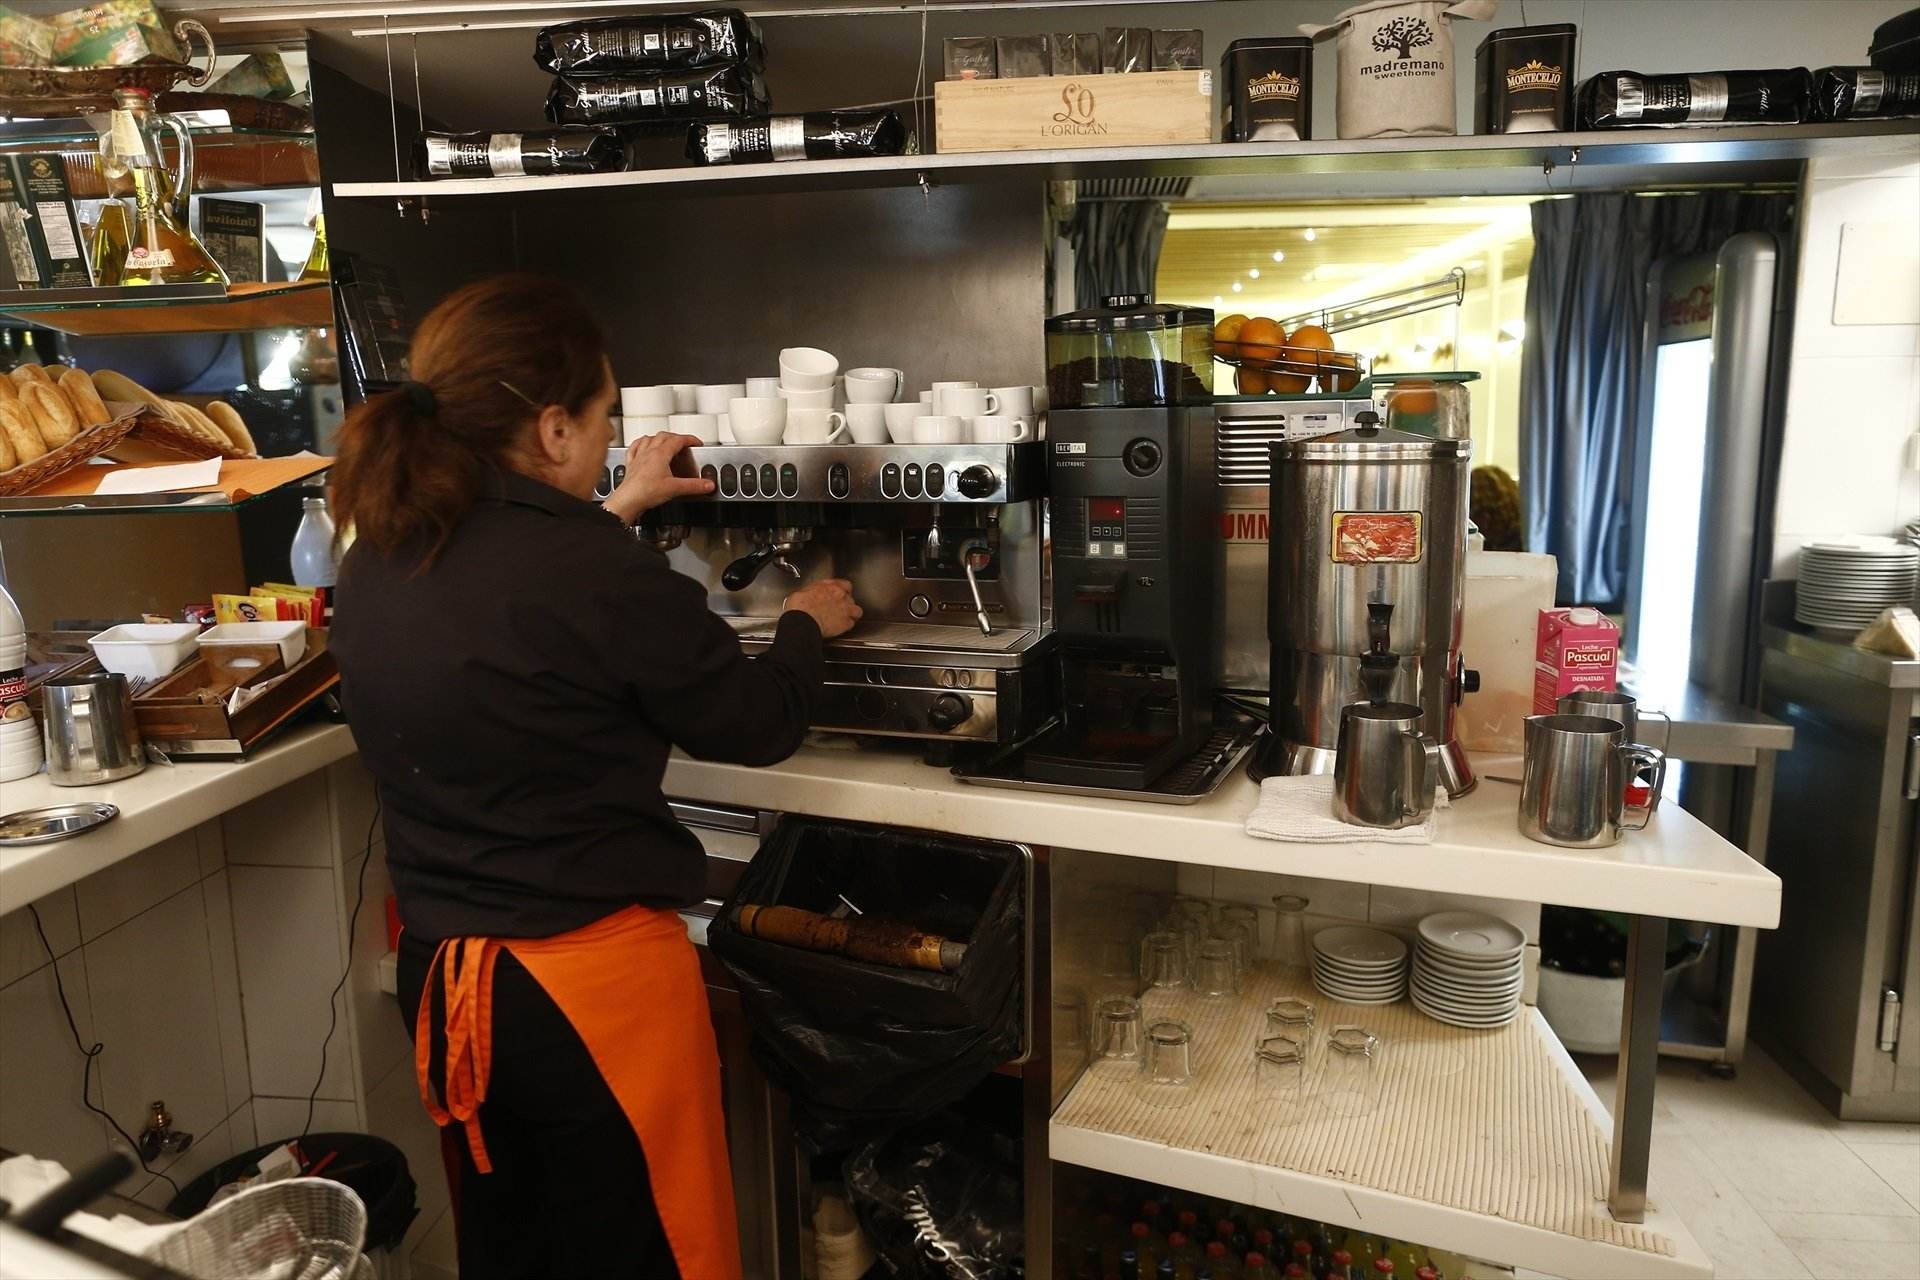 EuropaPress 5355407 trabajador trabajando camarero bar autonomo consumo cafeteria cafe precios